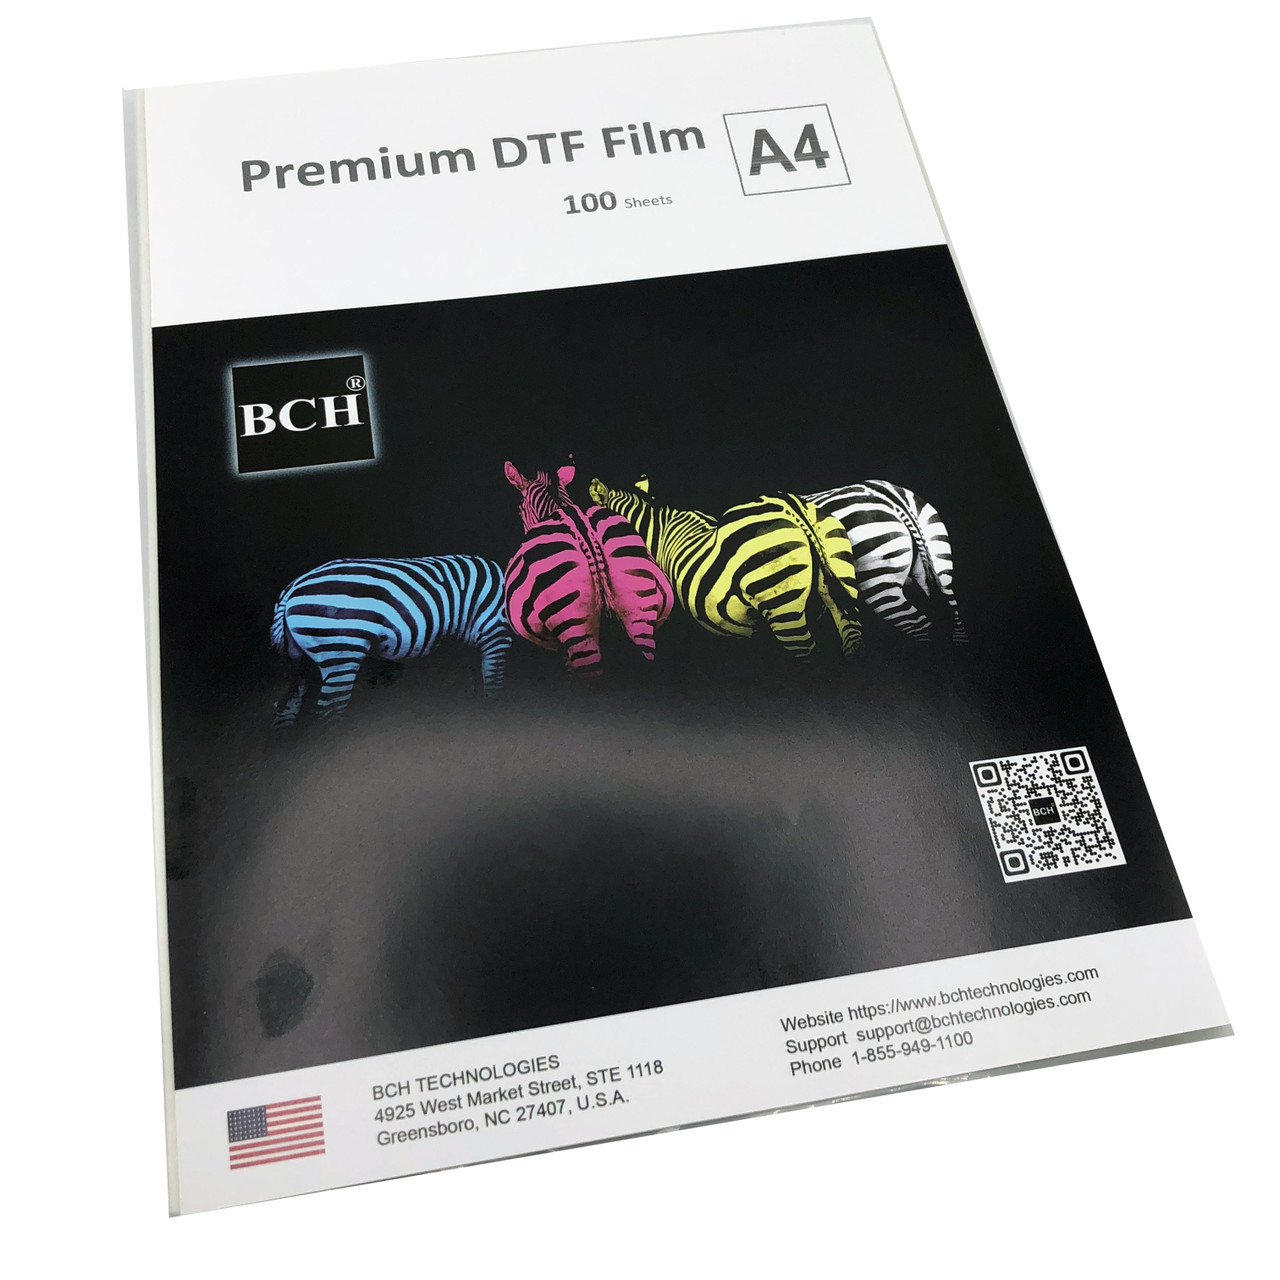 DTF Transfer Film (8.3 x 11.7) 50 Sheets PET Direct — Wide Image